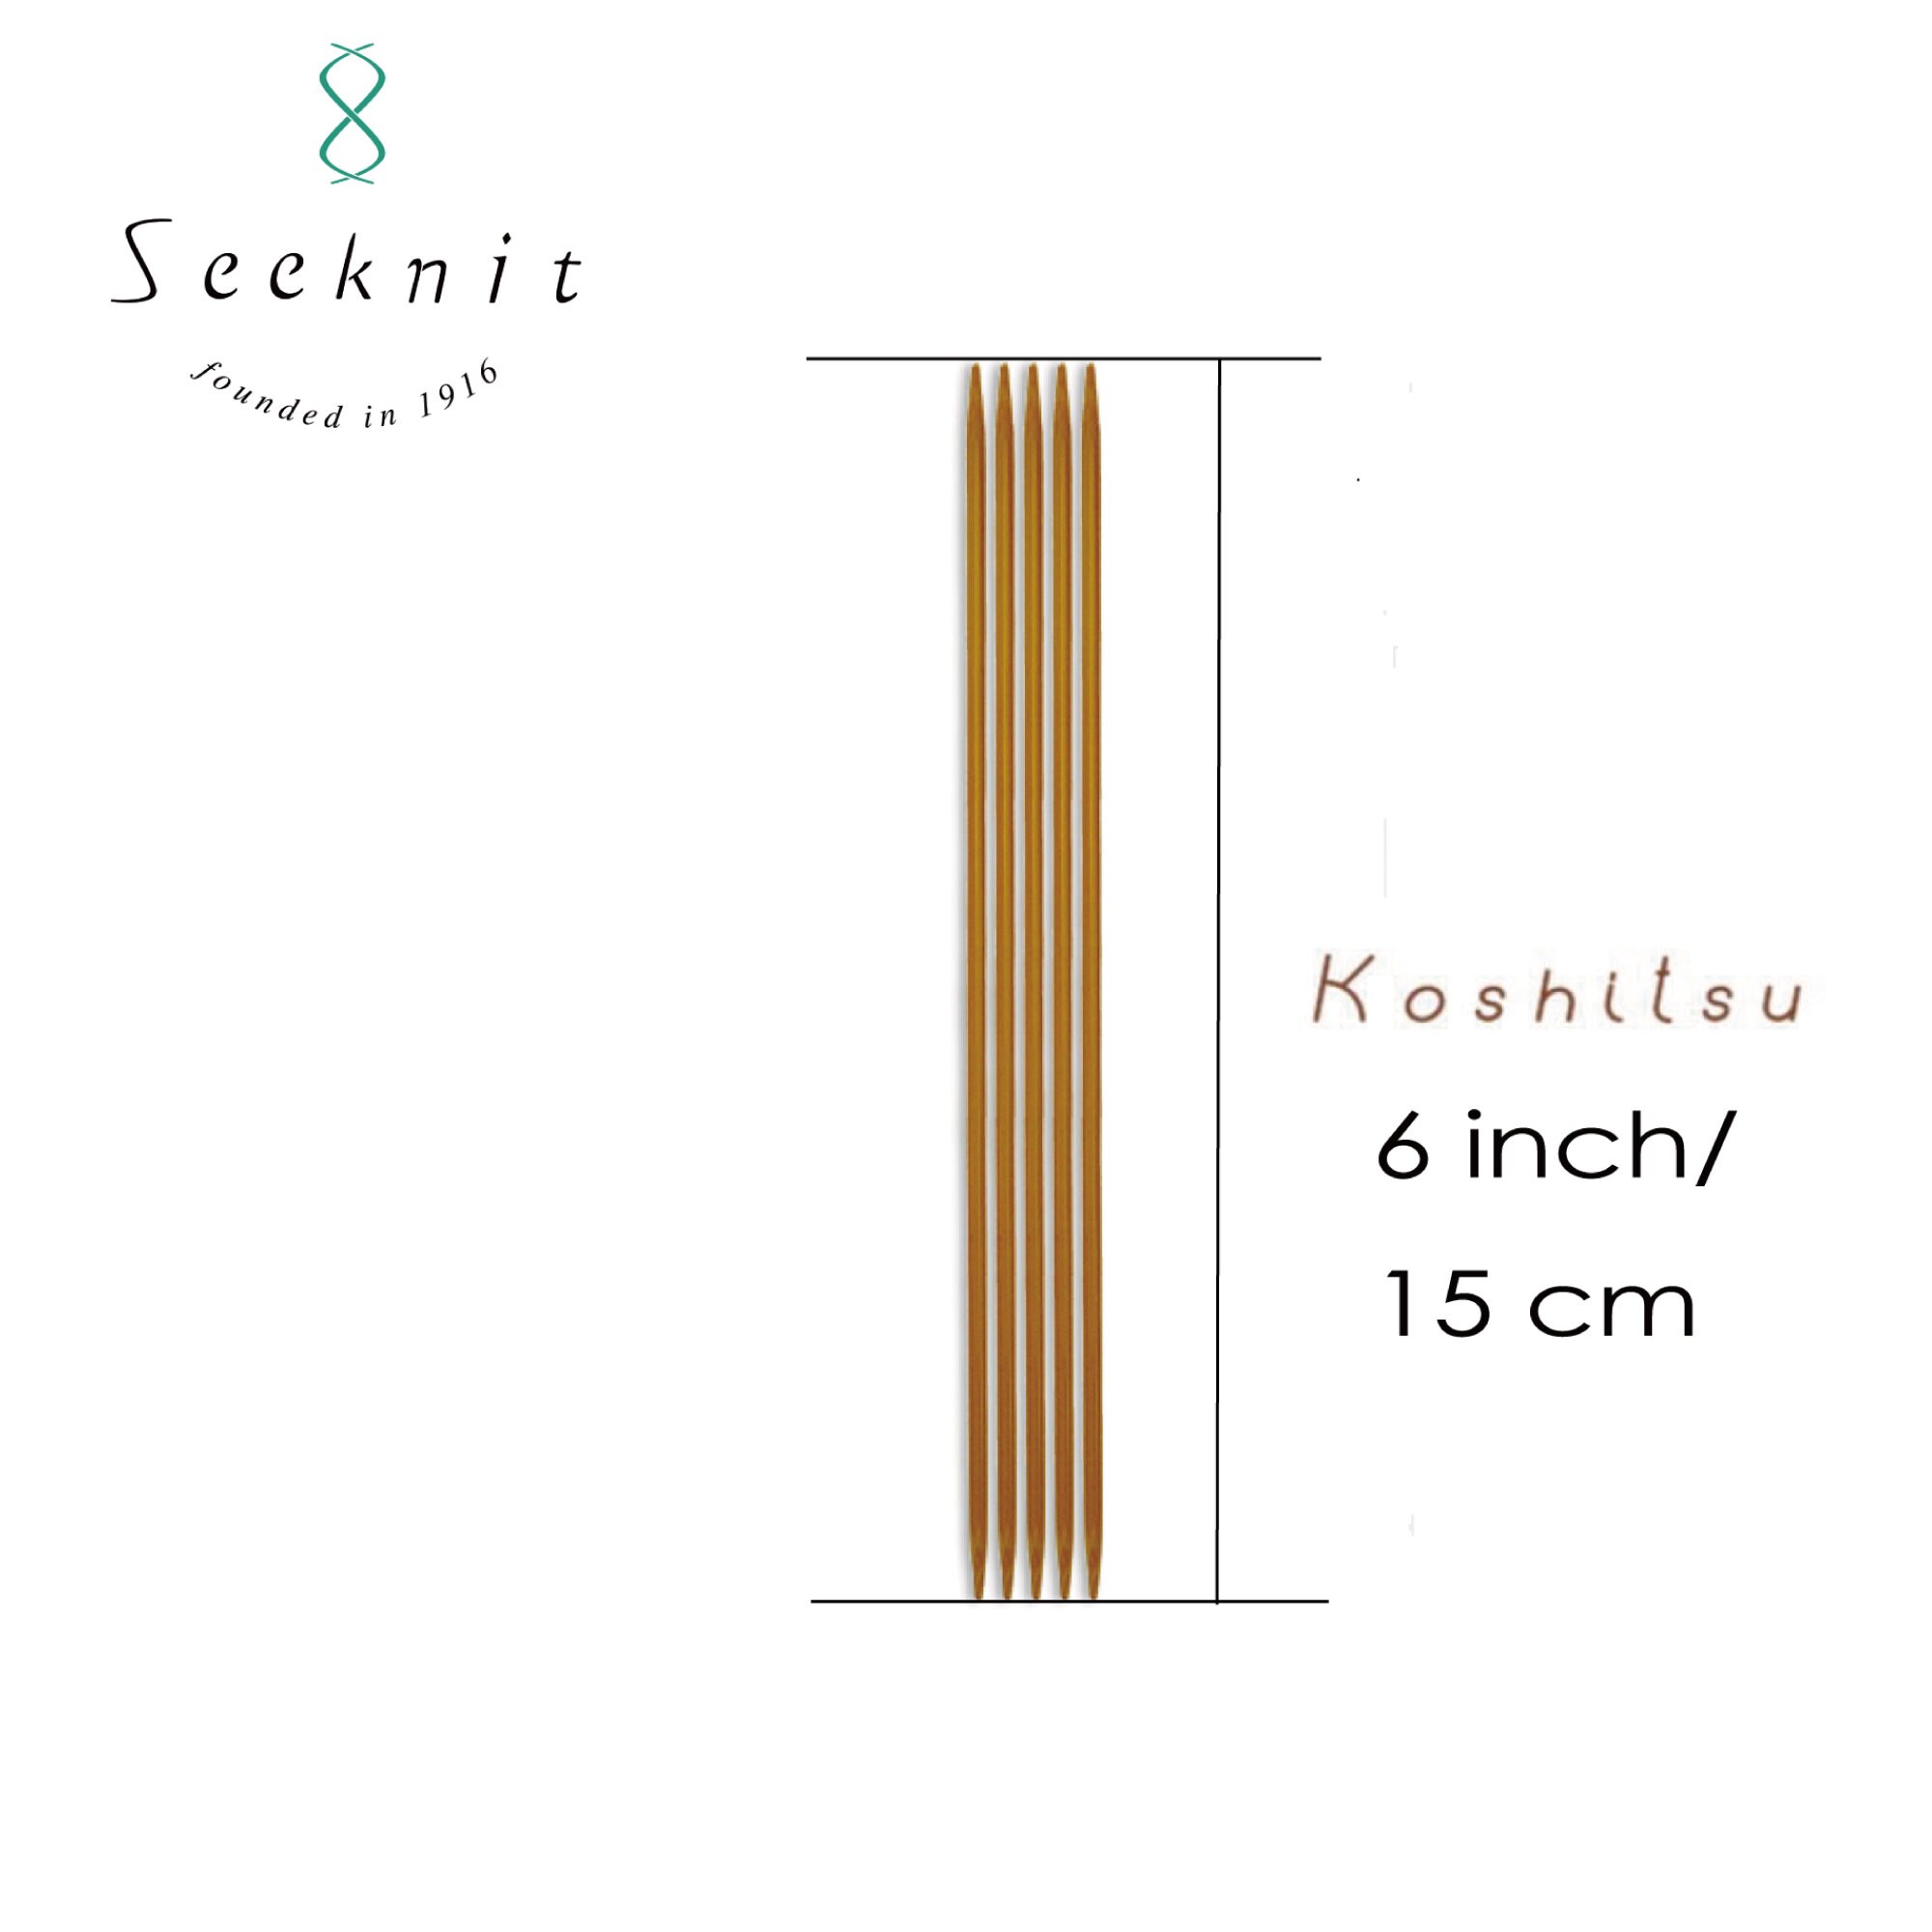 Buy SeeKnit Cable needle Koshitsou, find nearest shop here.